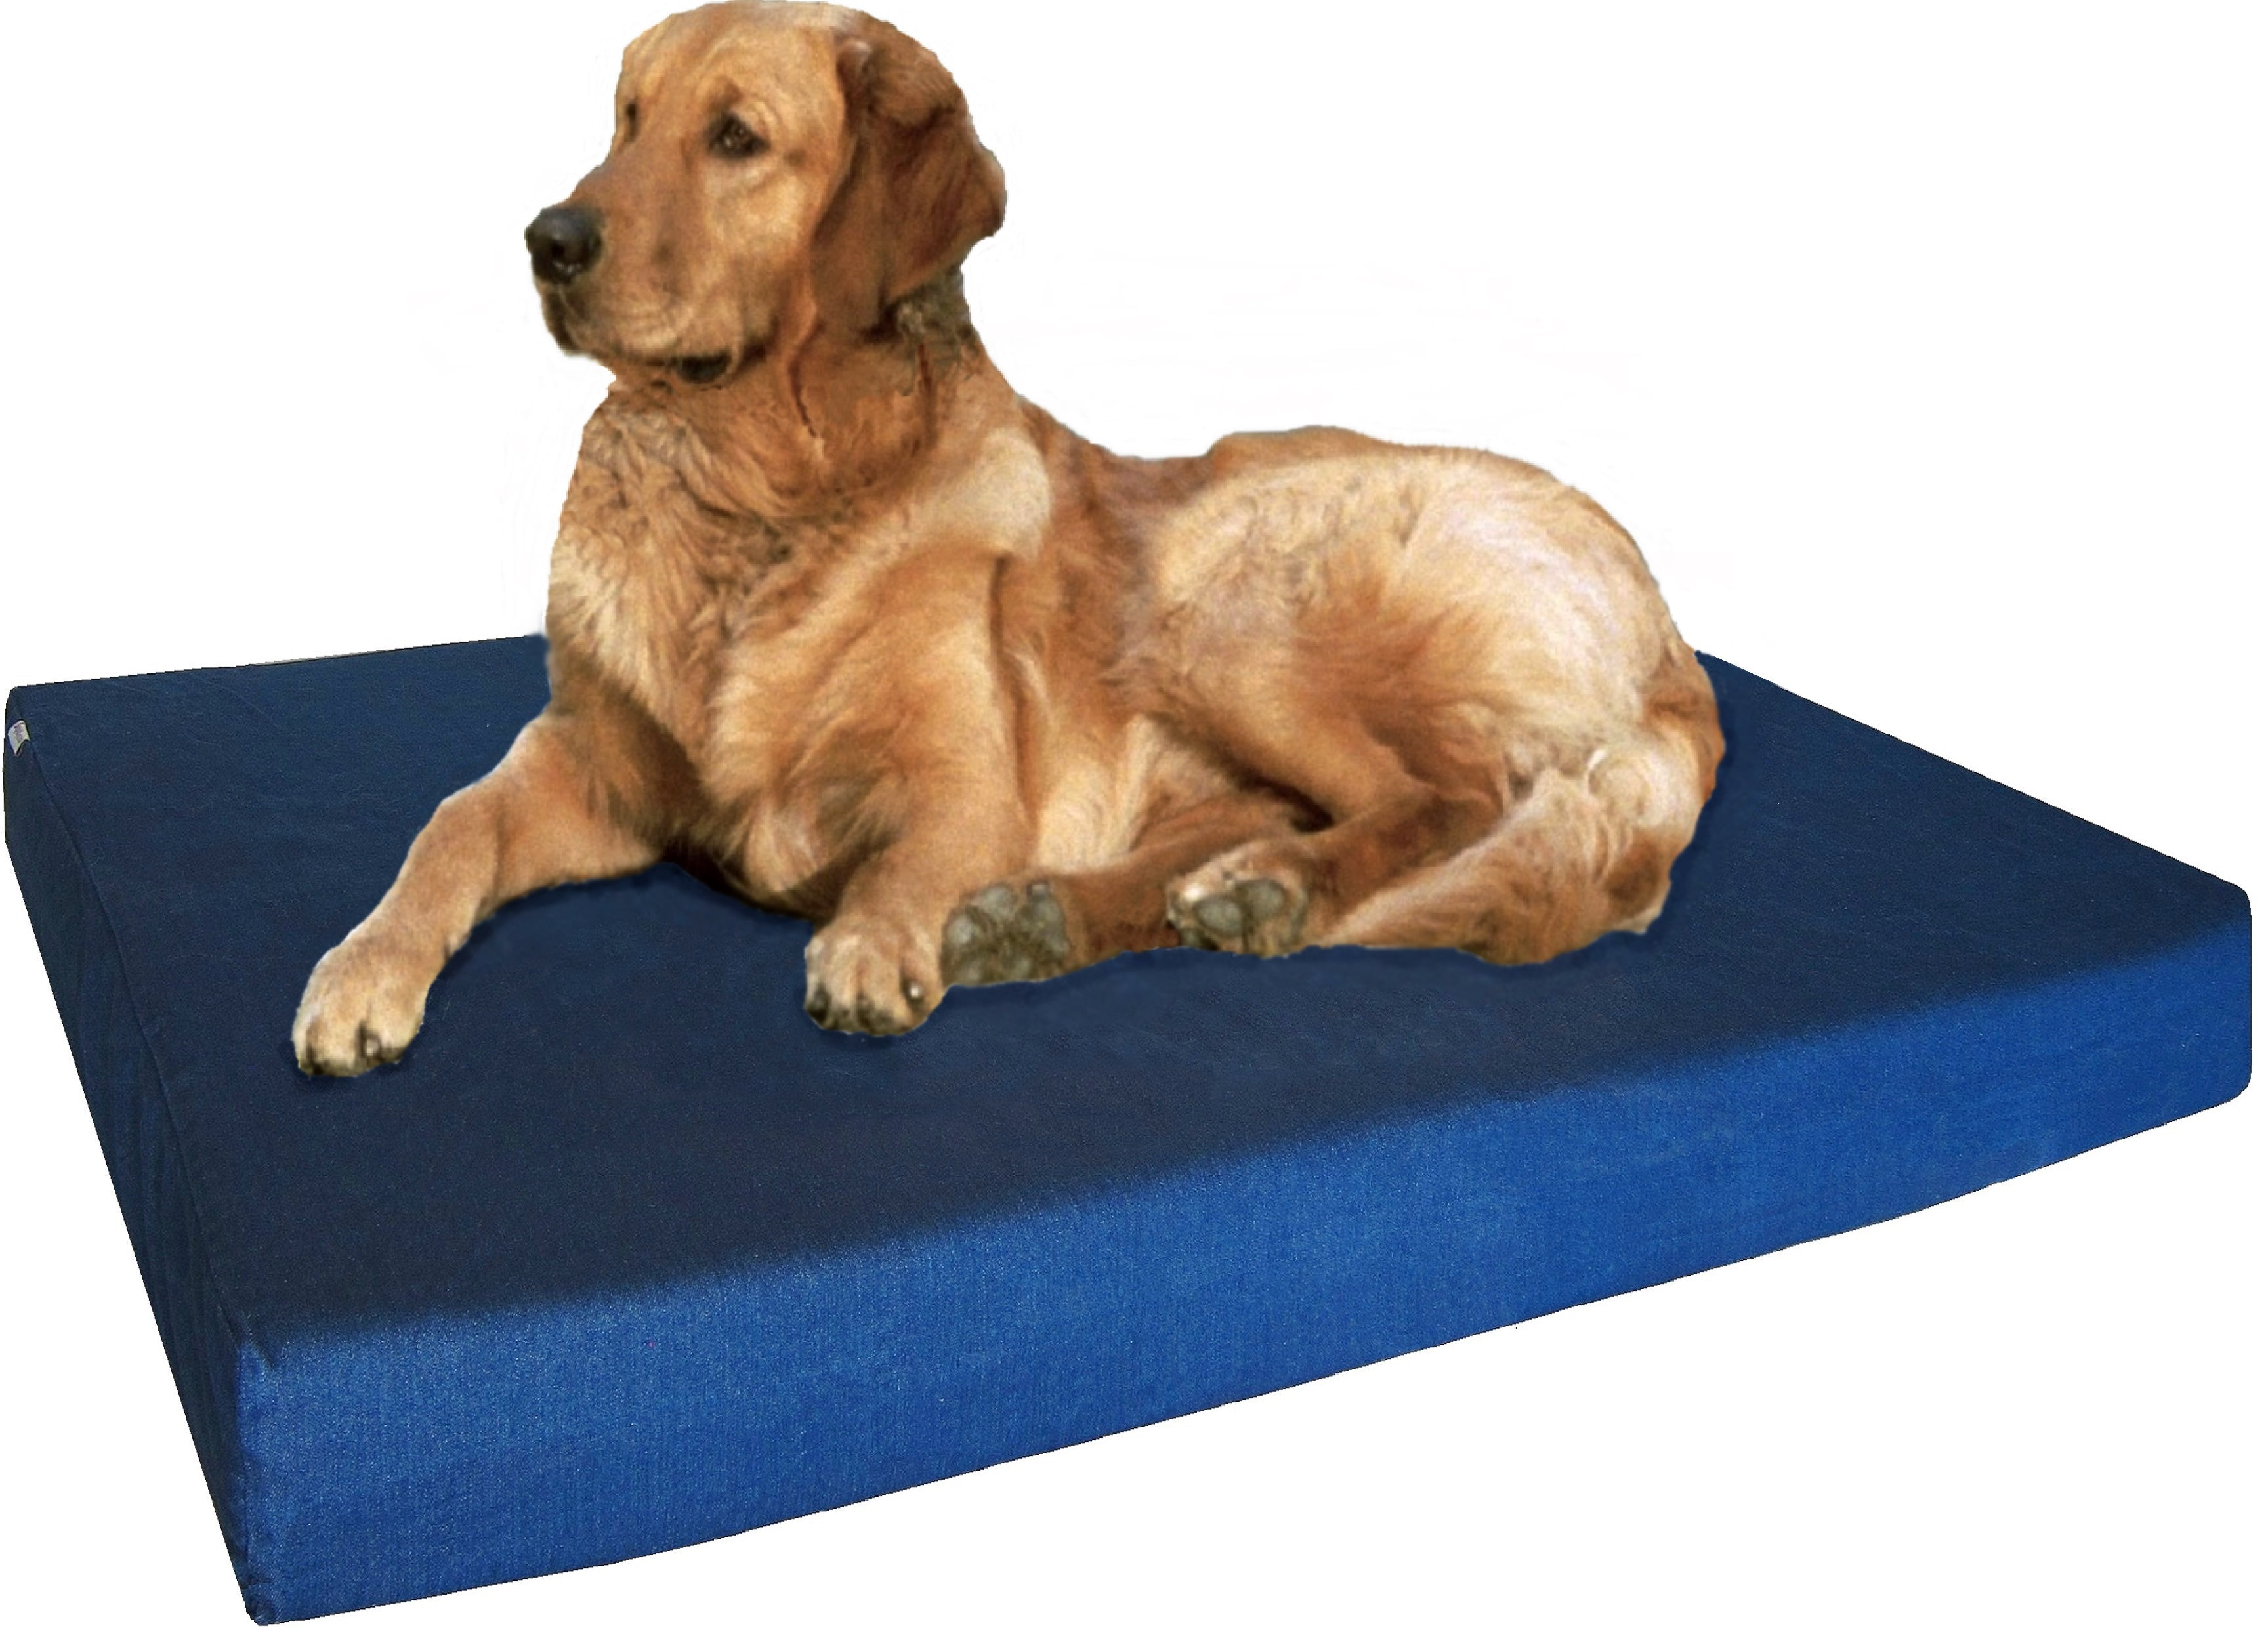 Waterproof Large Orthopedic MEMORY FOAM Pad Pet Dog Bed 41"X27"X4" 42"X28" Crate